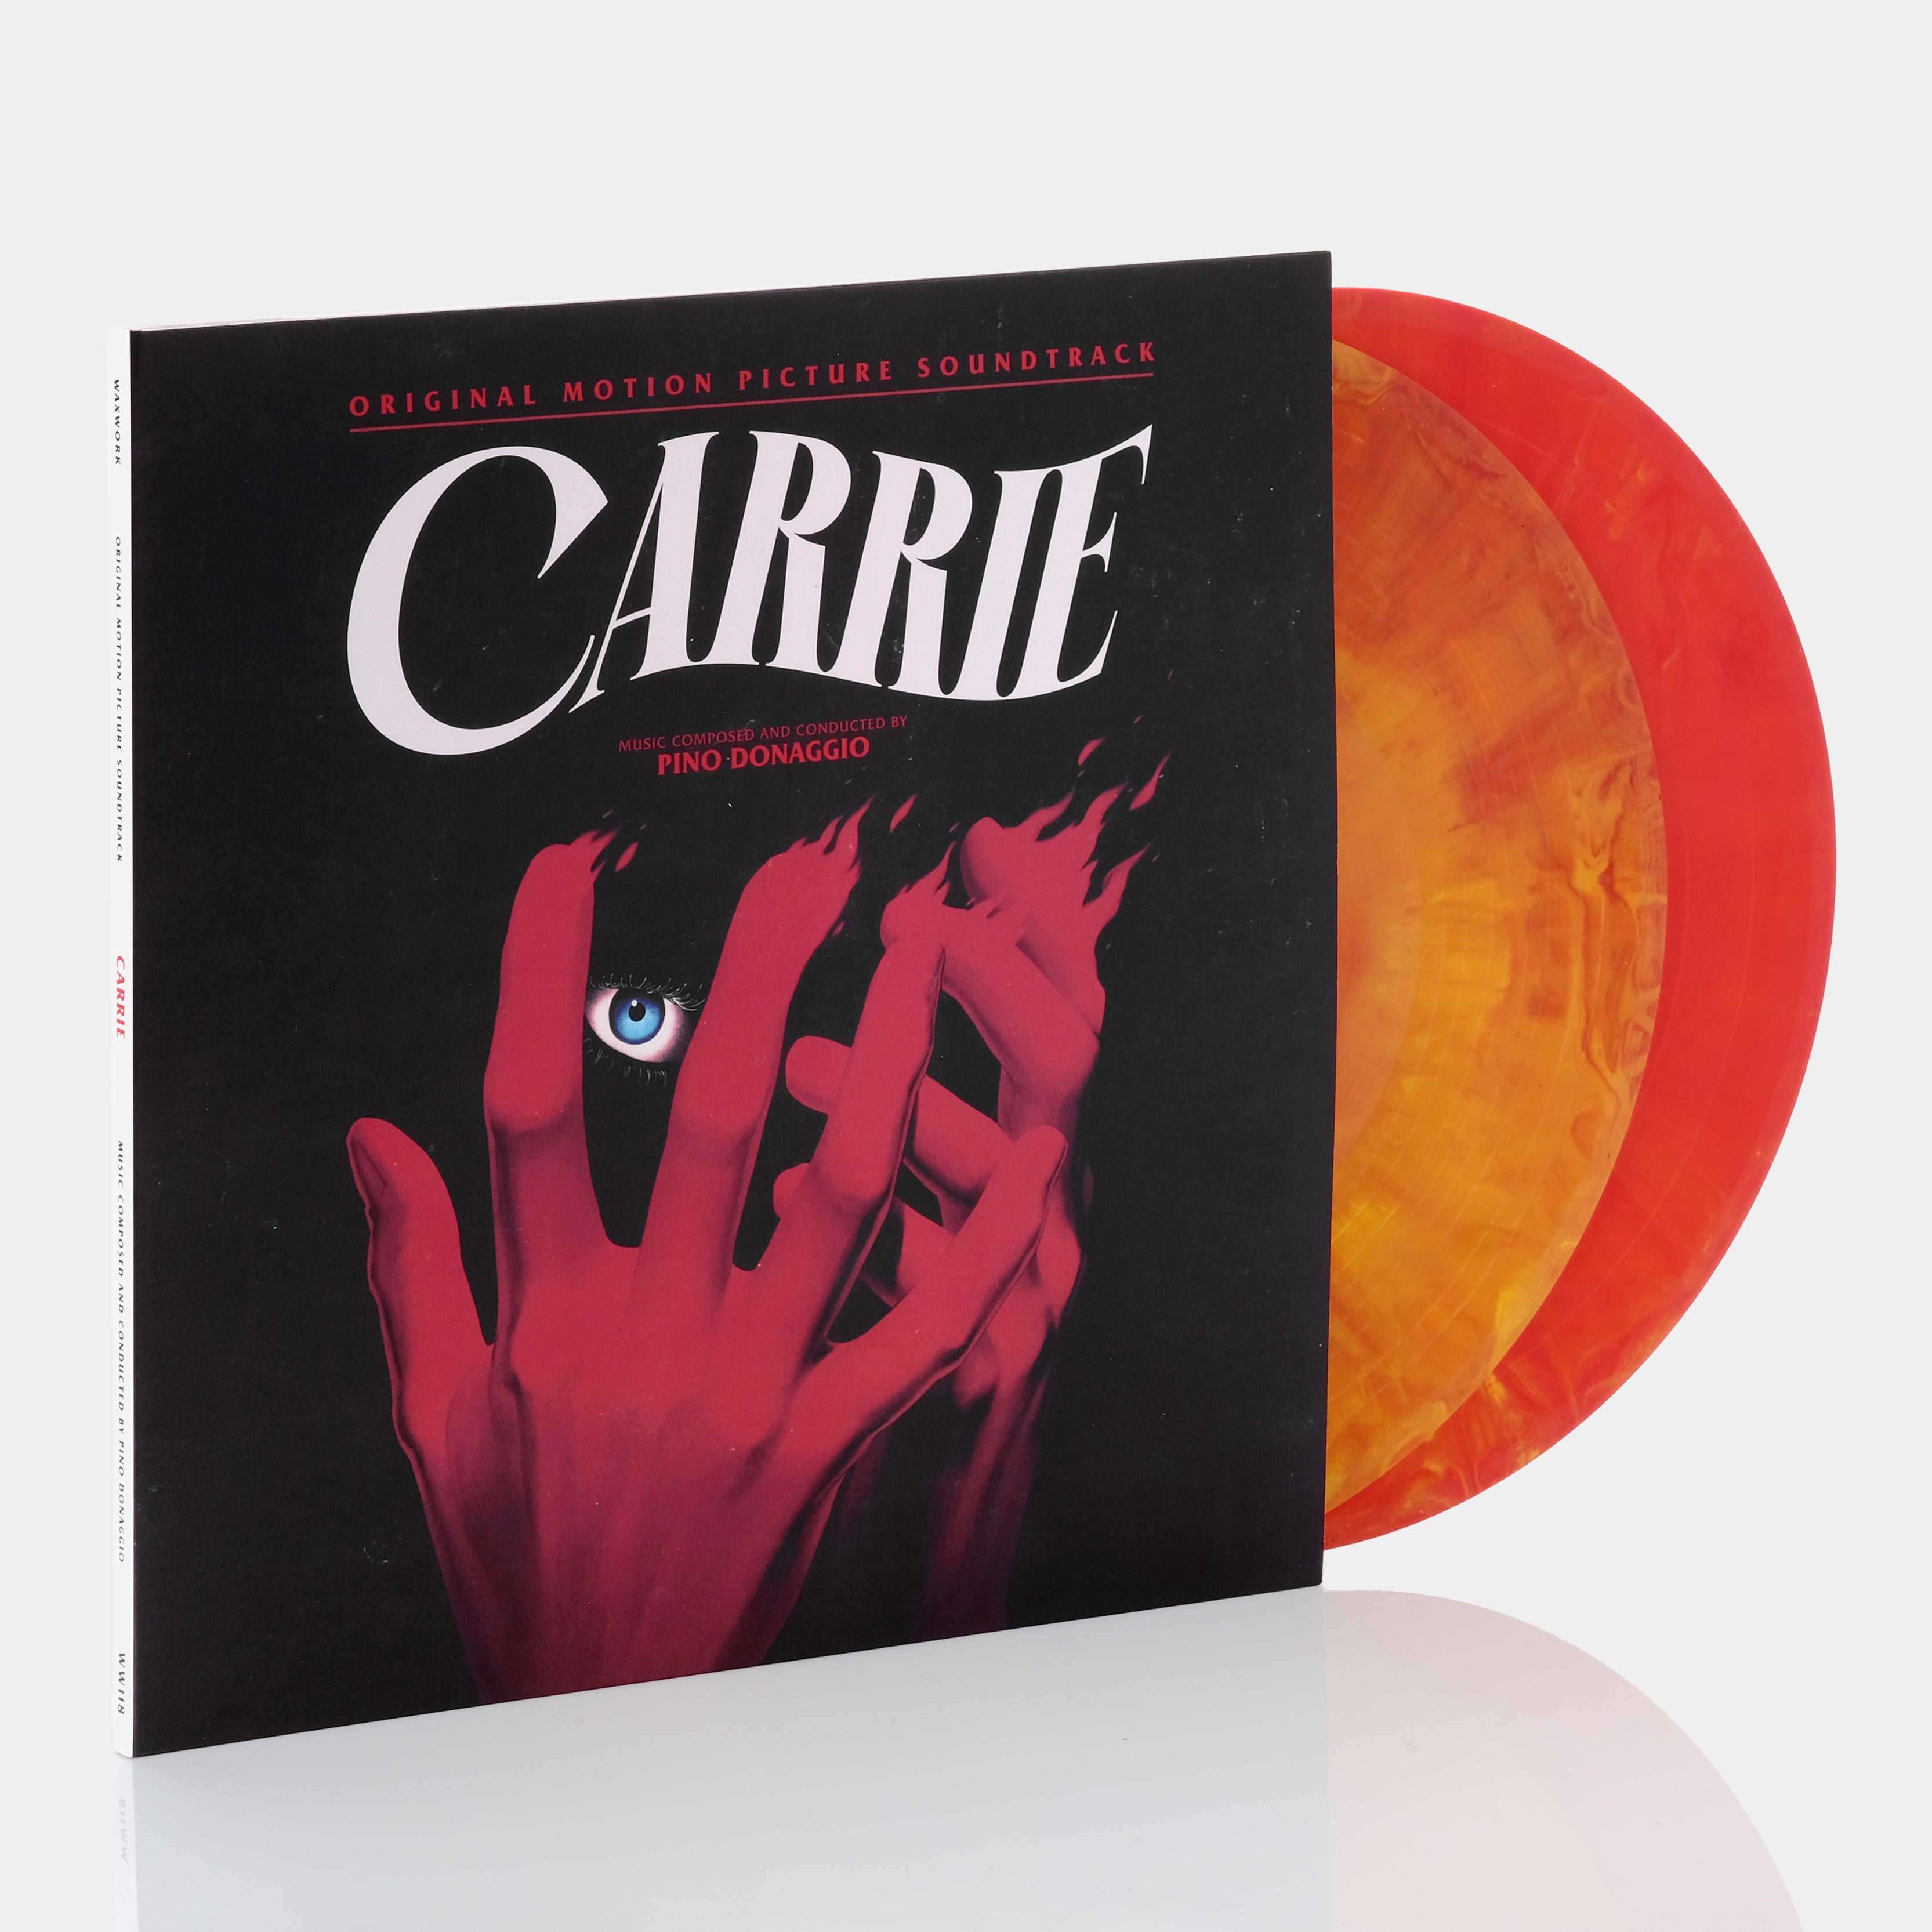 Pino Donaggio - Carrie (Original Motion Picture Soundtrack) 2xLP Orange & Red Splatter Vinyl Record